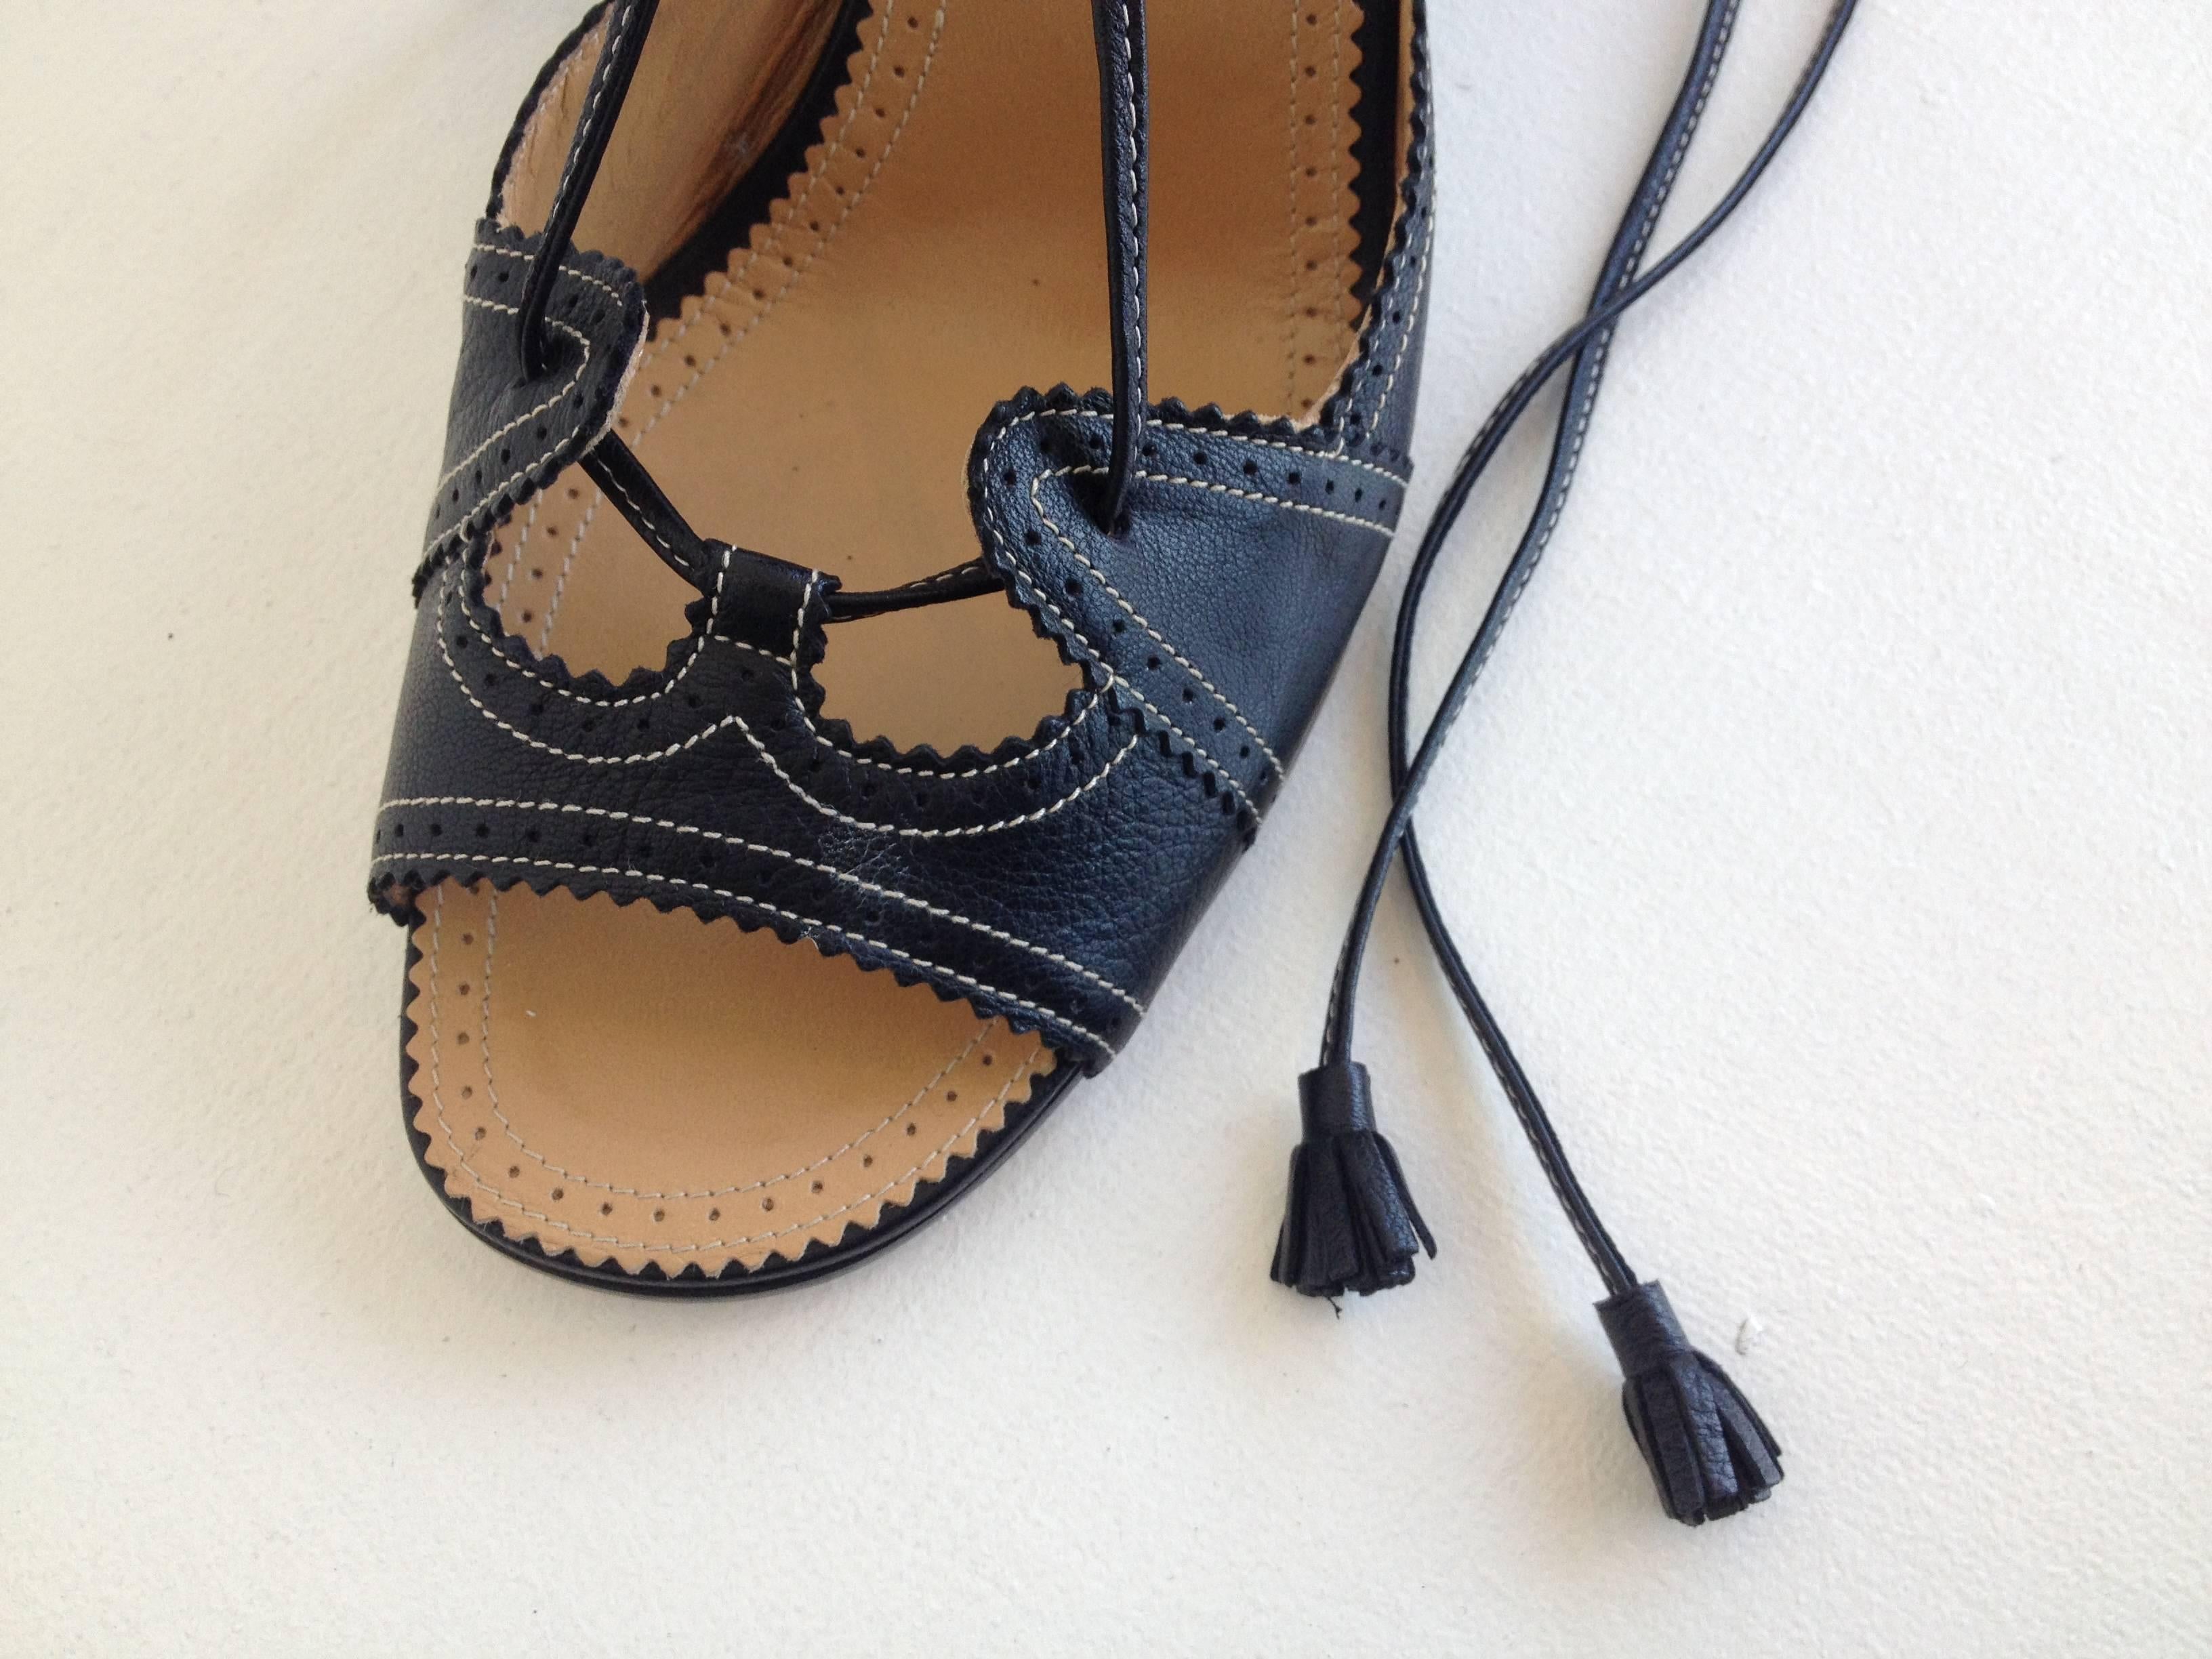 Women's Hermes Black Leather Sandal Wedges Size 38 (7.5)